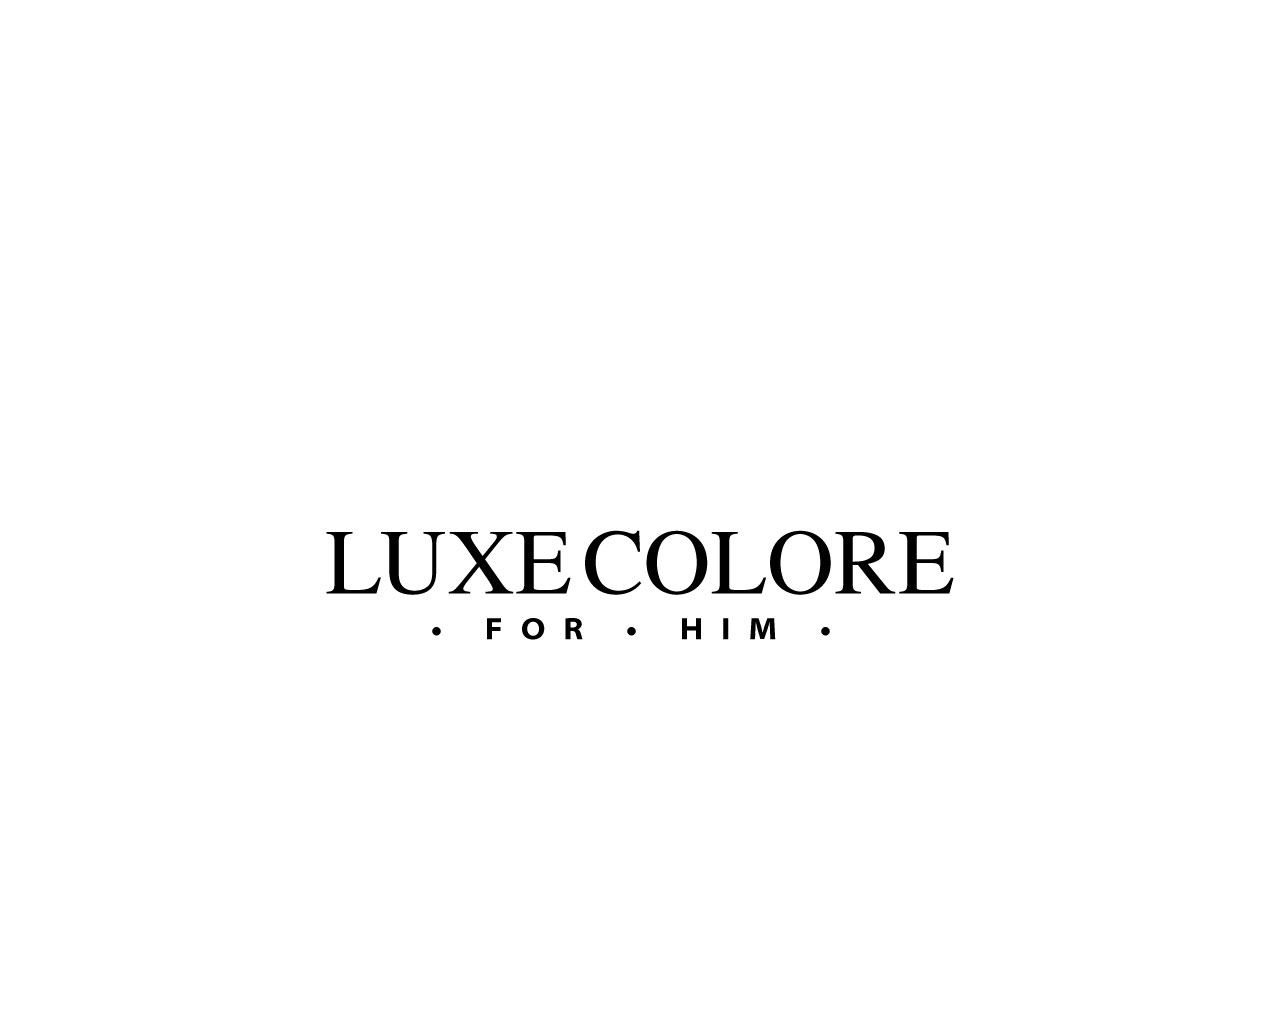 Luxe-Colore-logo1